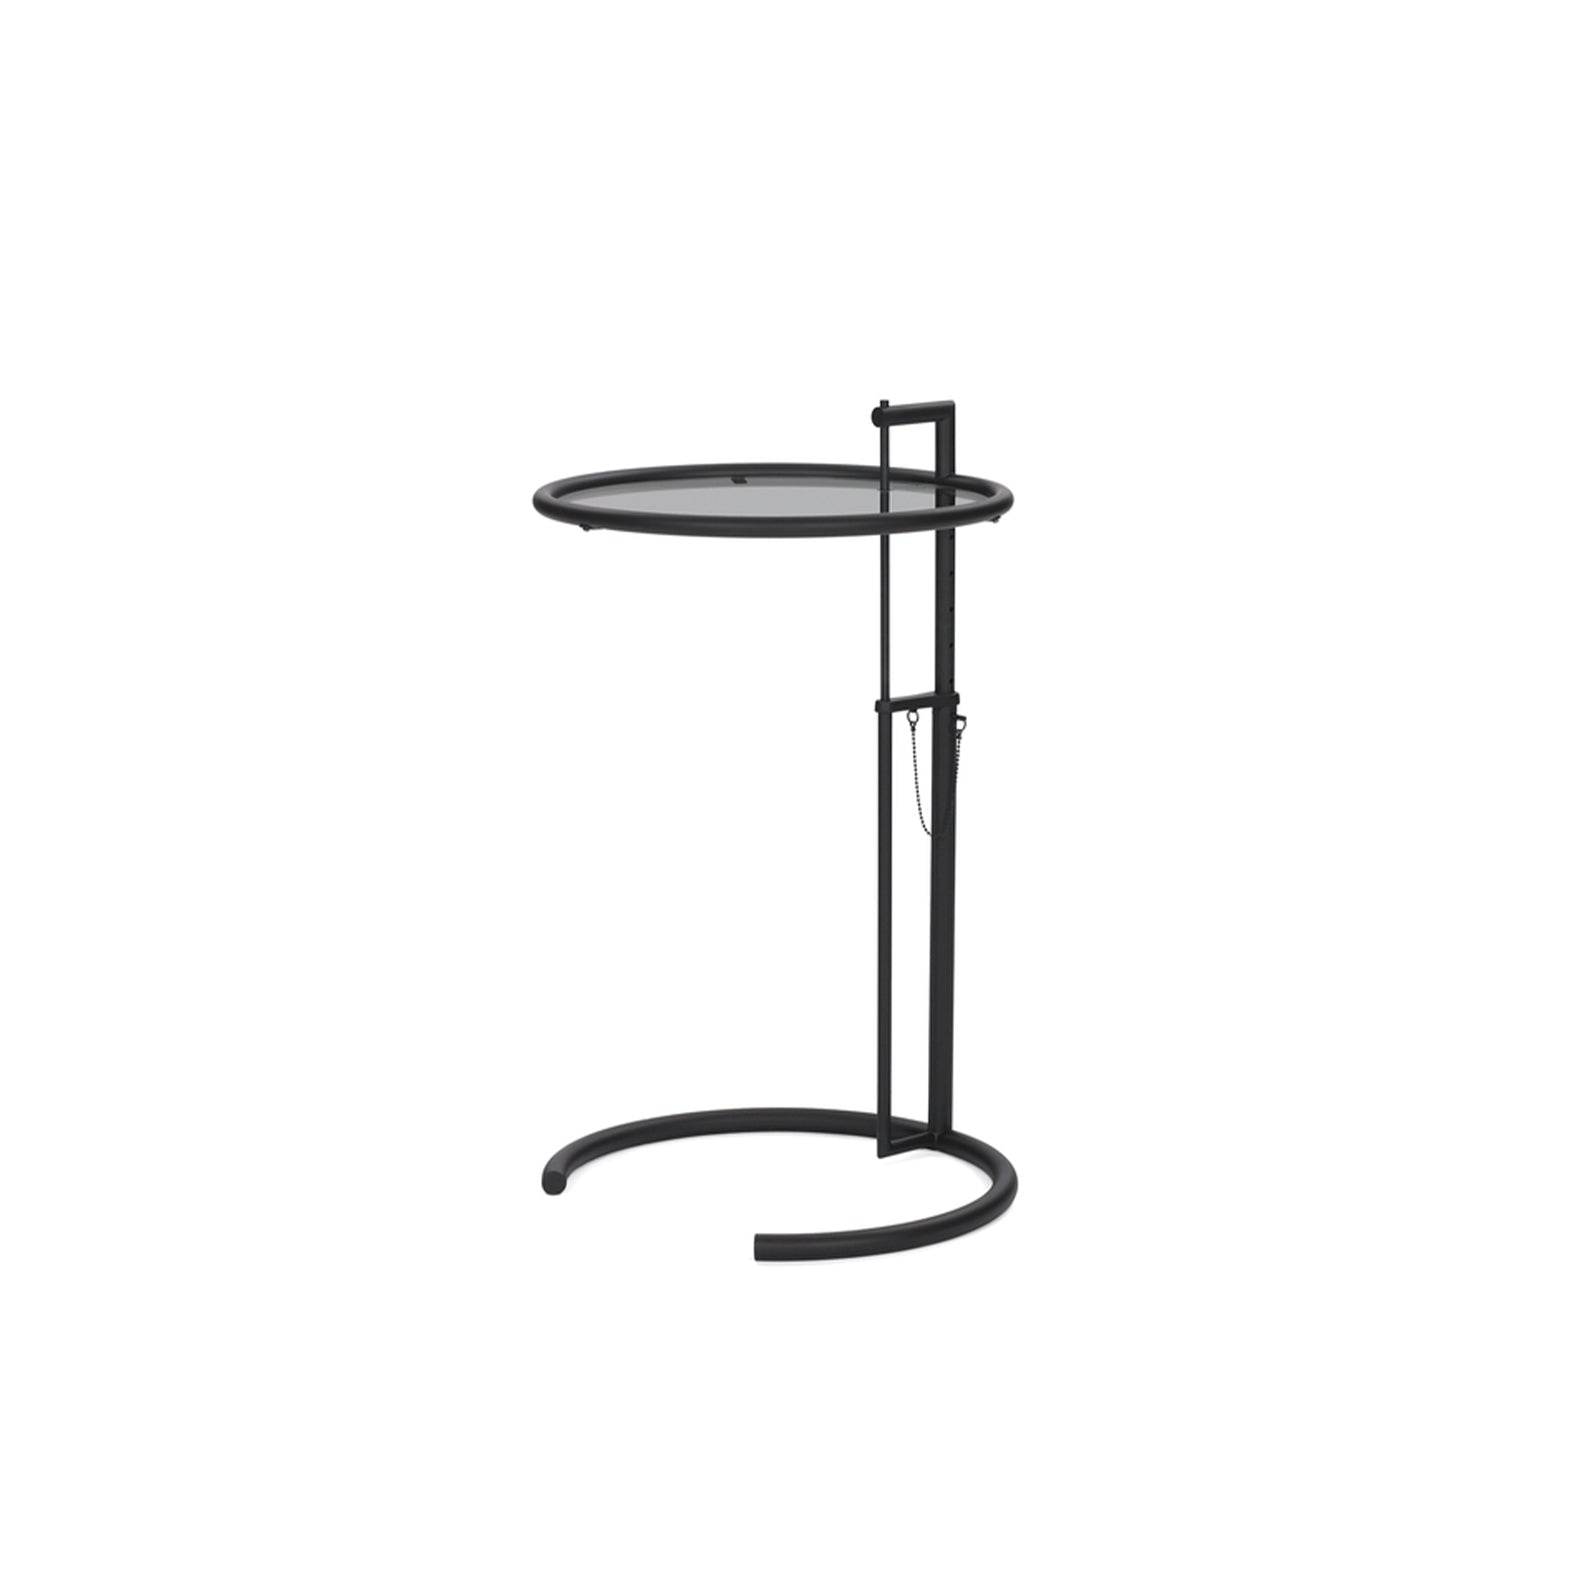 Adjustable Table E 1027 Black Version